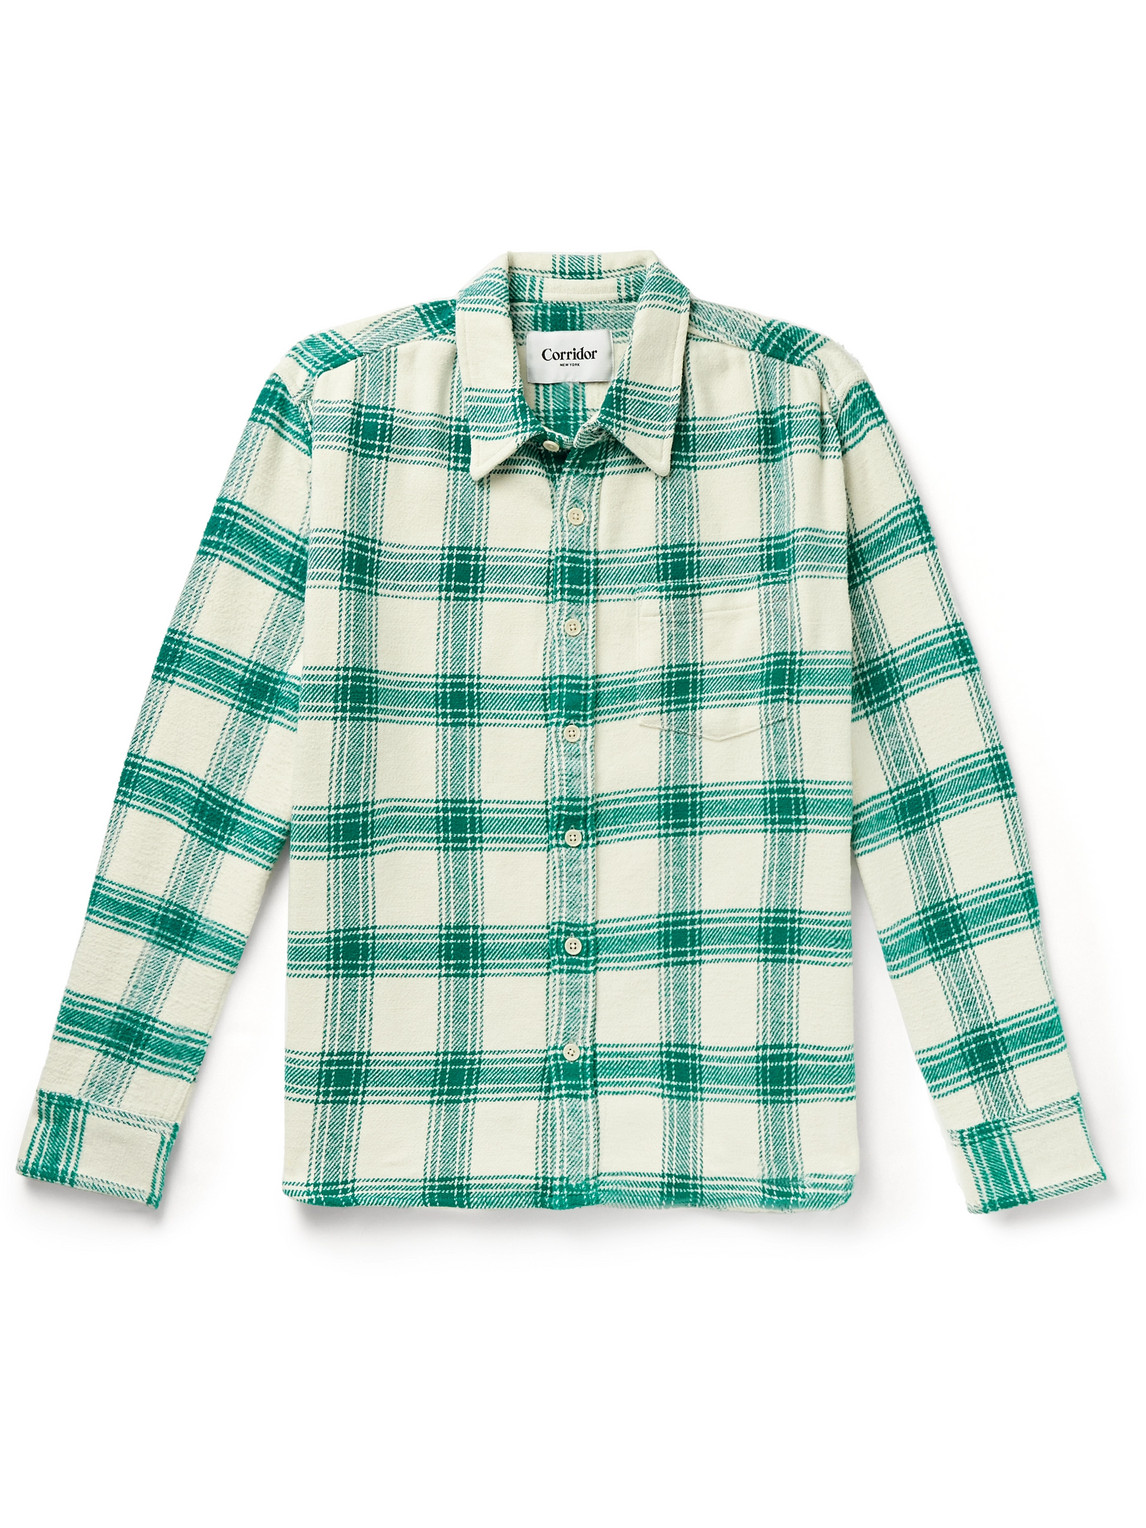 Corridor - Checked Cotton-Flannel Shirt - Men - Green - XL von Corridor